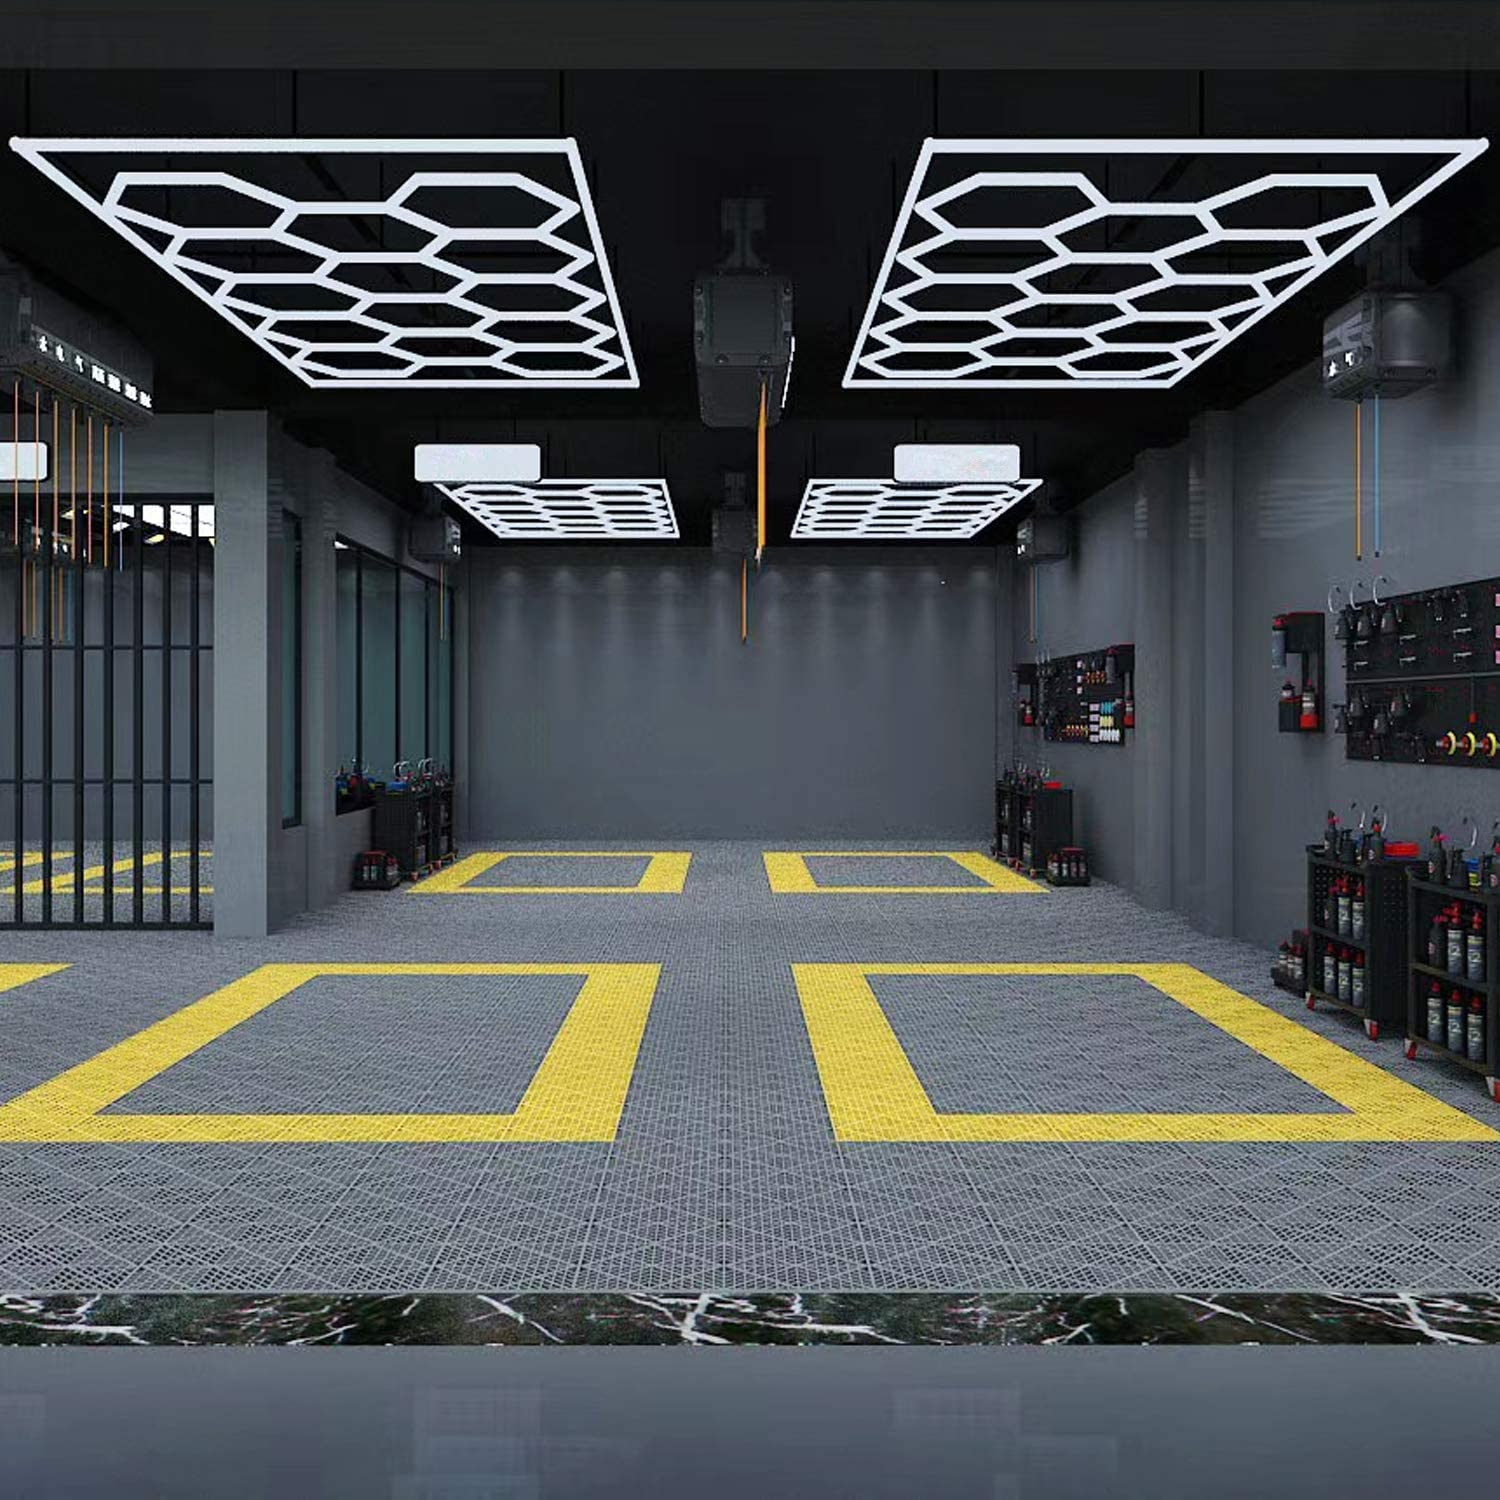 HIVE - (Gen 2) LED Garage Lighting System - Single Garage Kit with Border